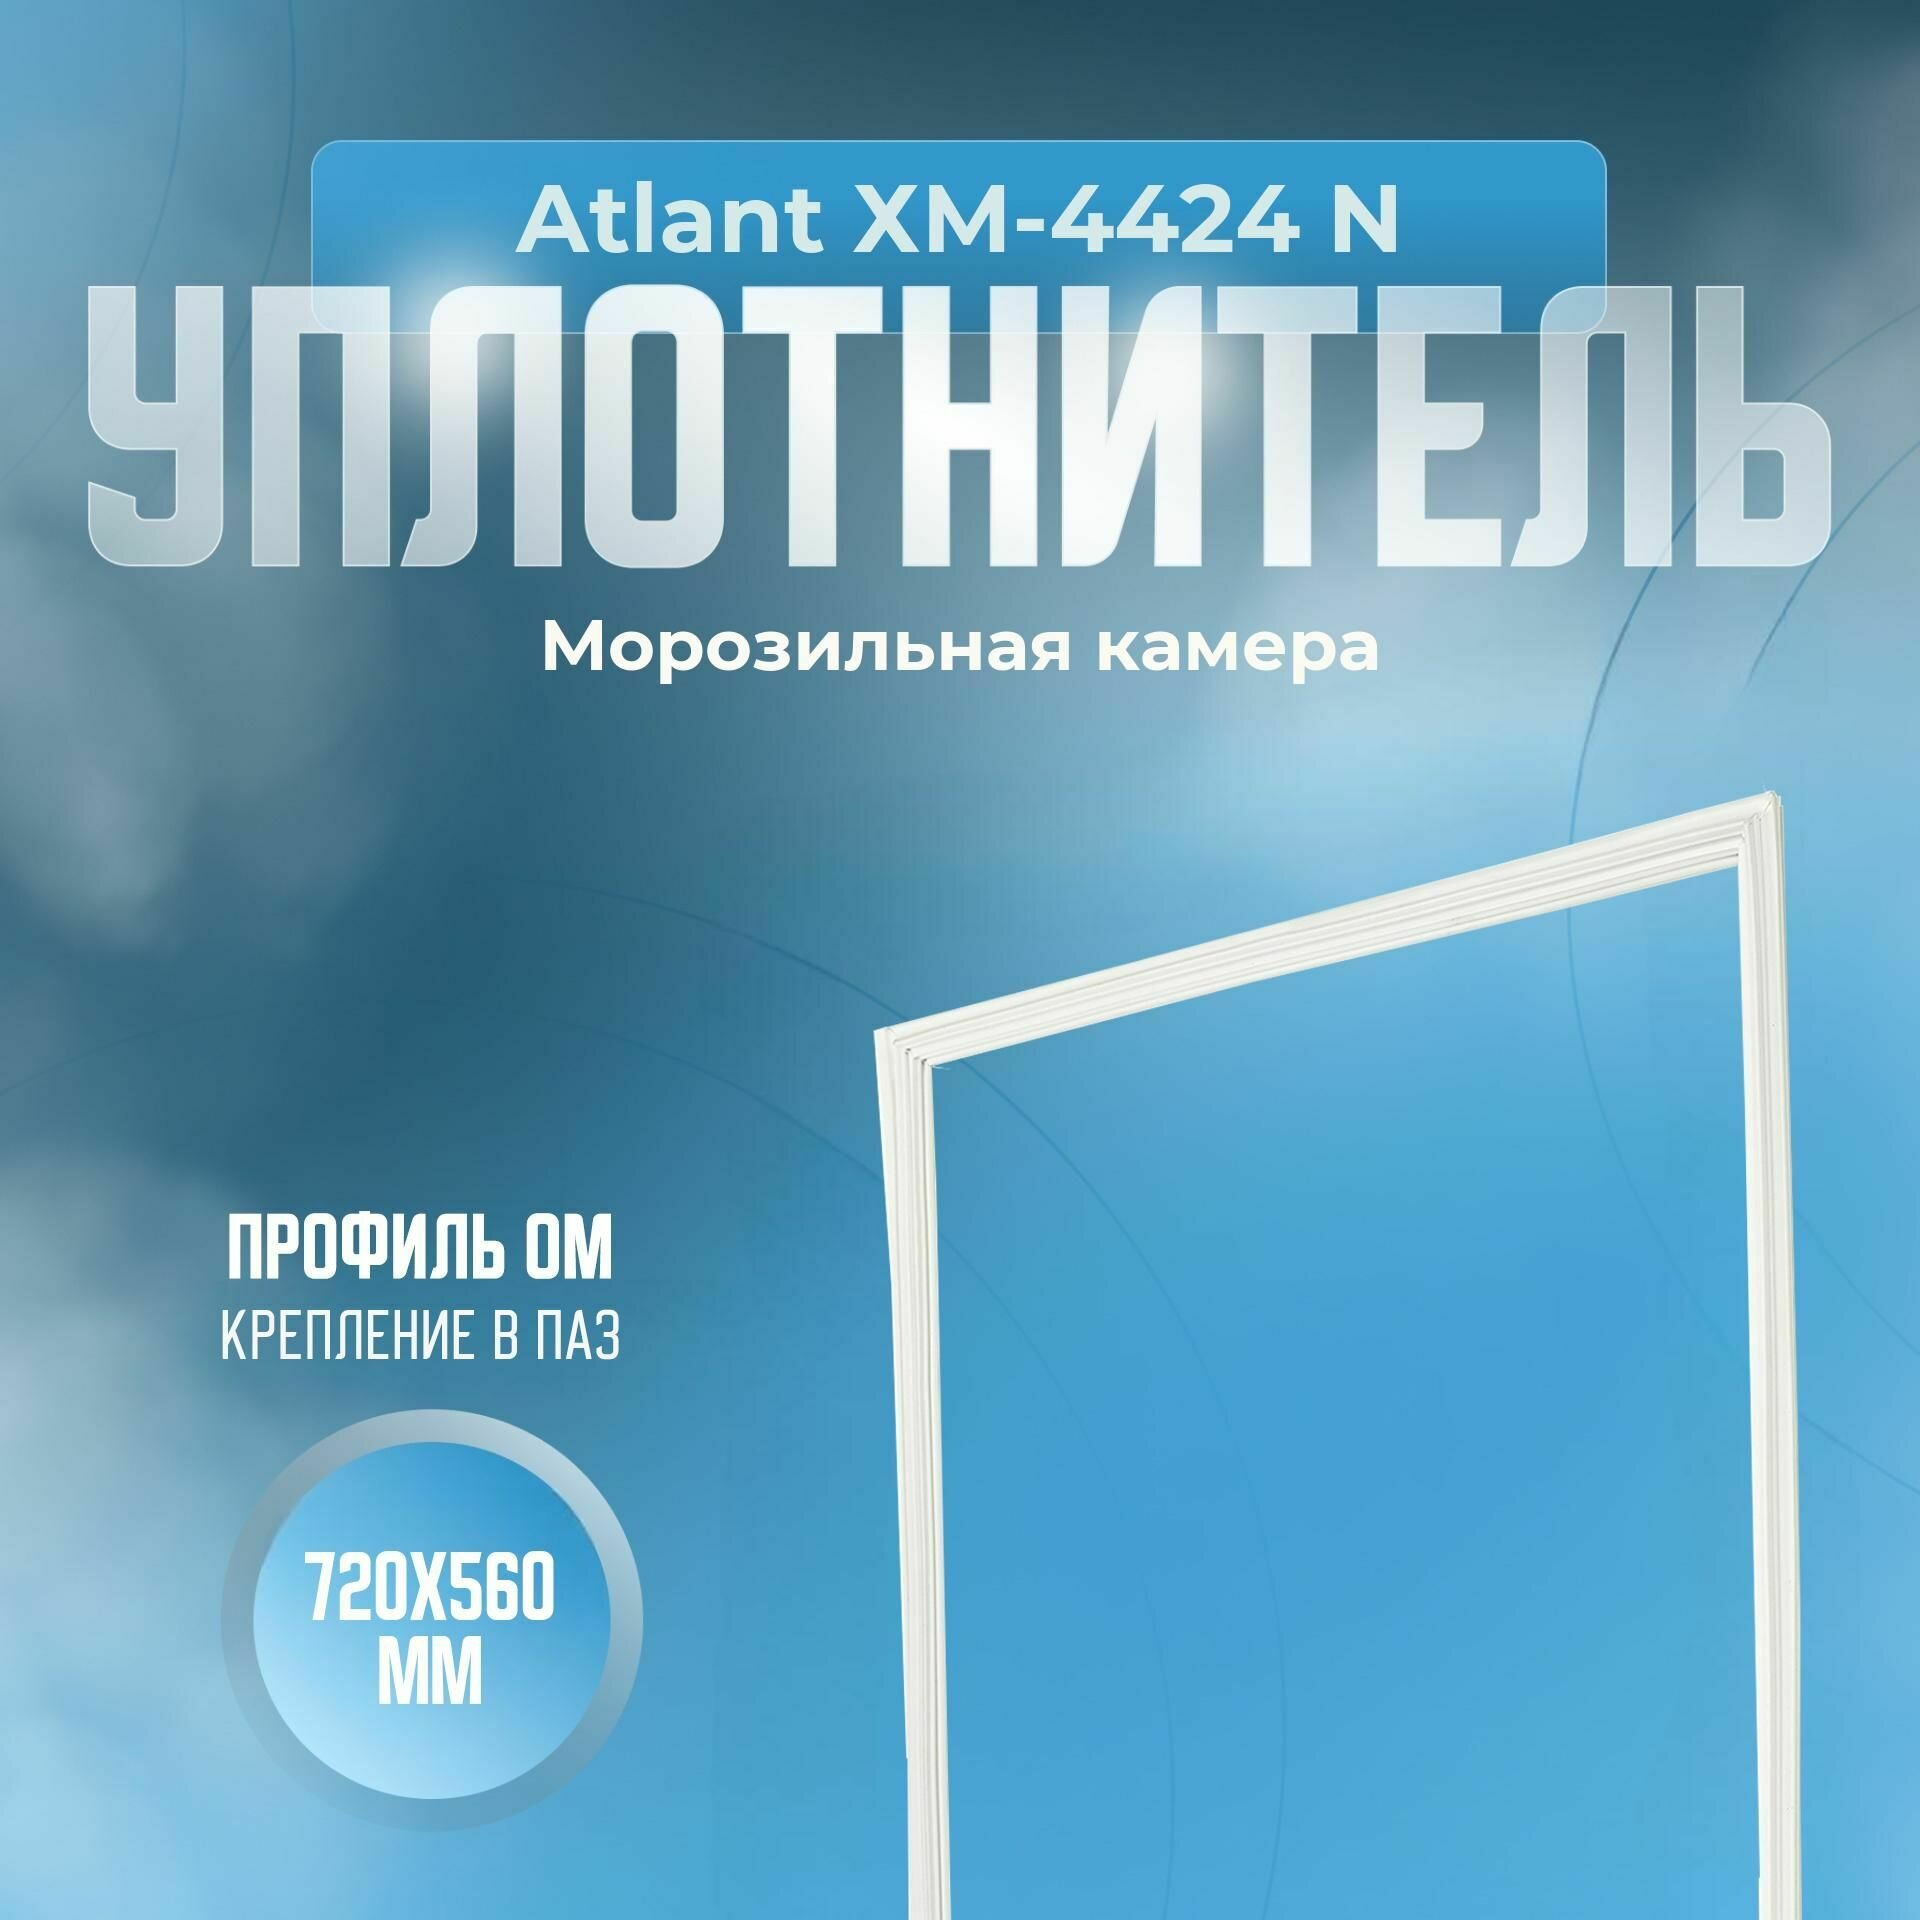 Уплотнитель Atlant ХМ-4424 N. м. к, Размер - 720x560 мм. ОМ